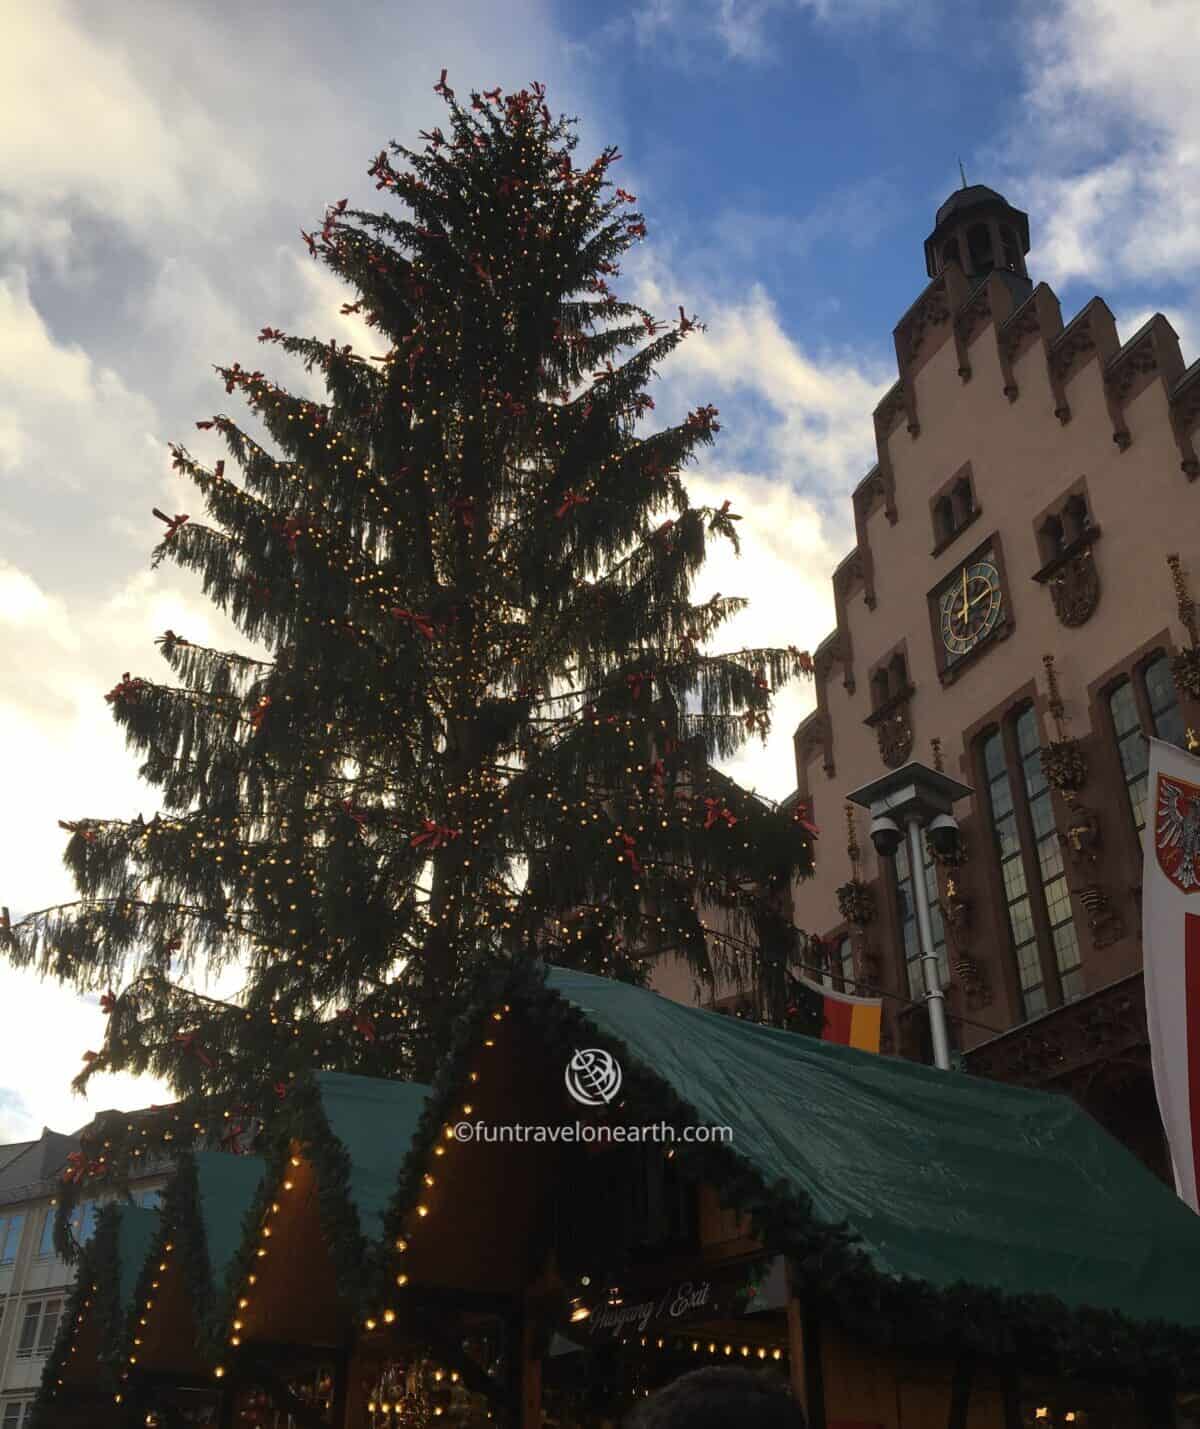 Römerberg , Frankfurt Christmas Market